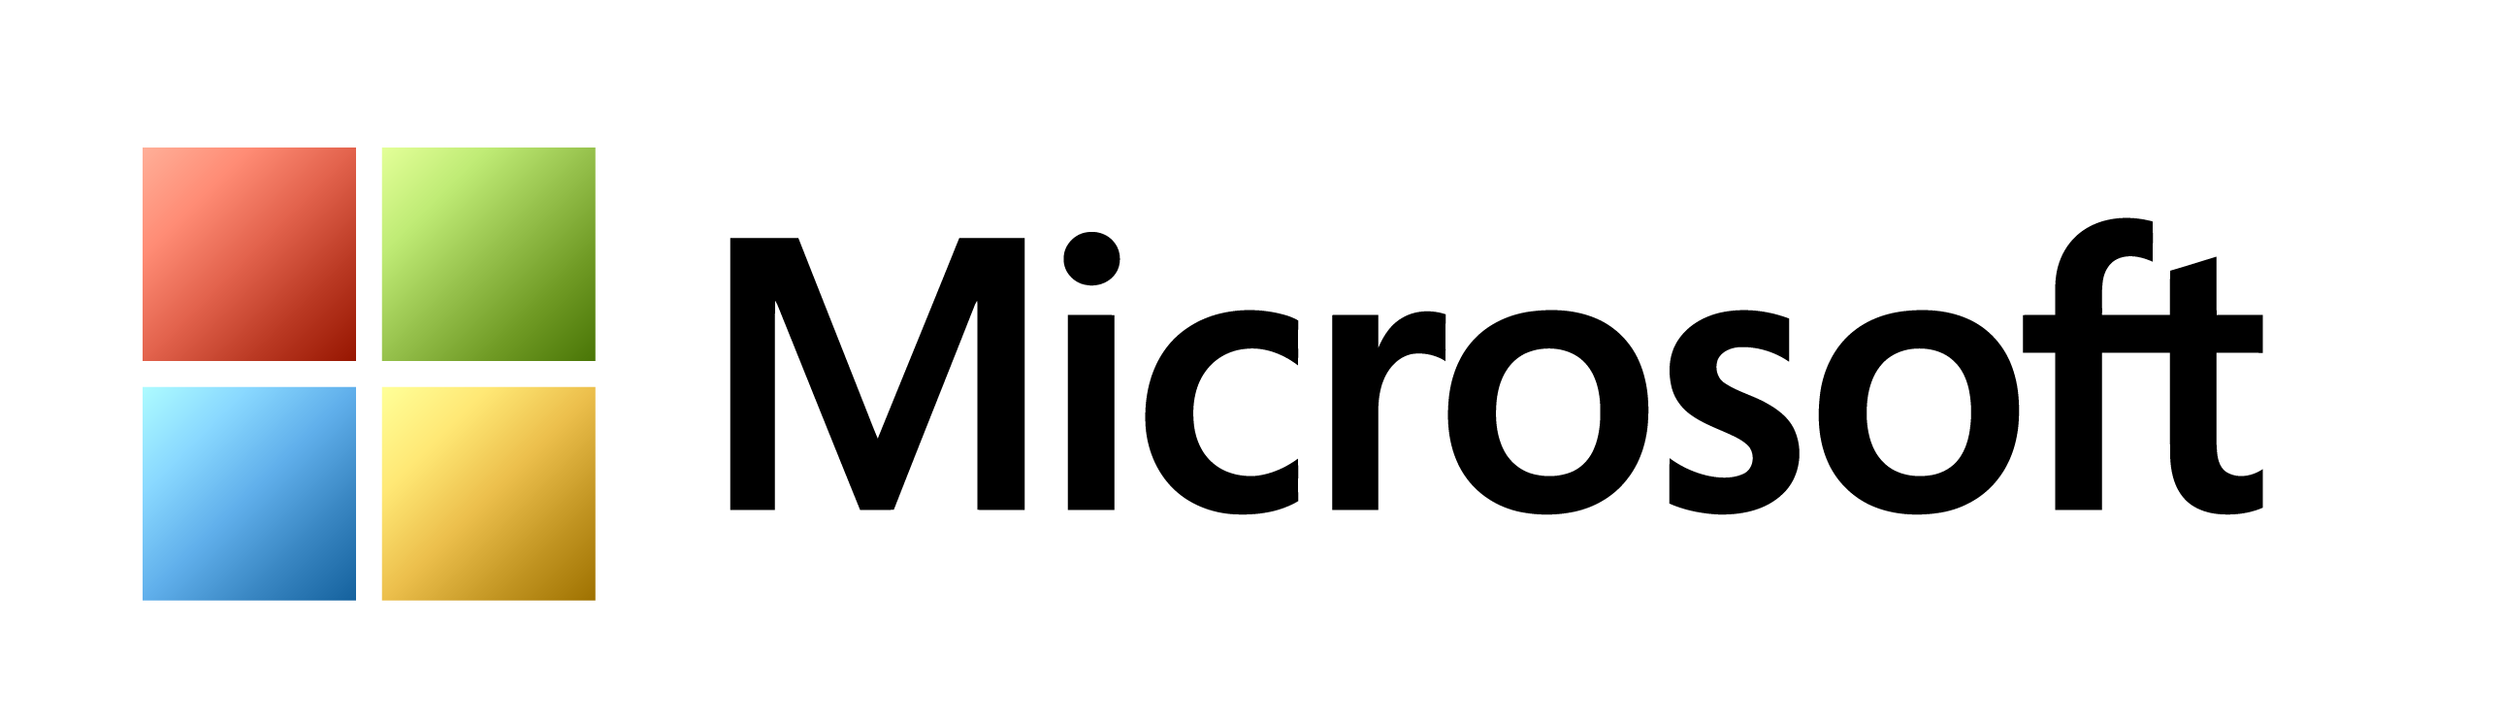 microsoft_logo_update_final_2_by_failurewant-dap94g1.png